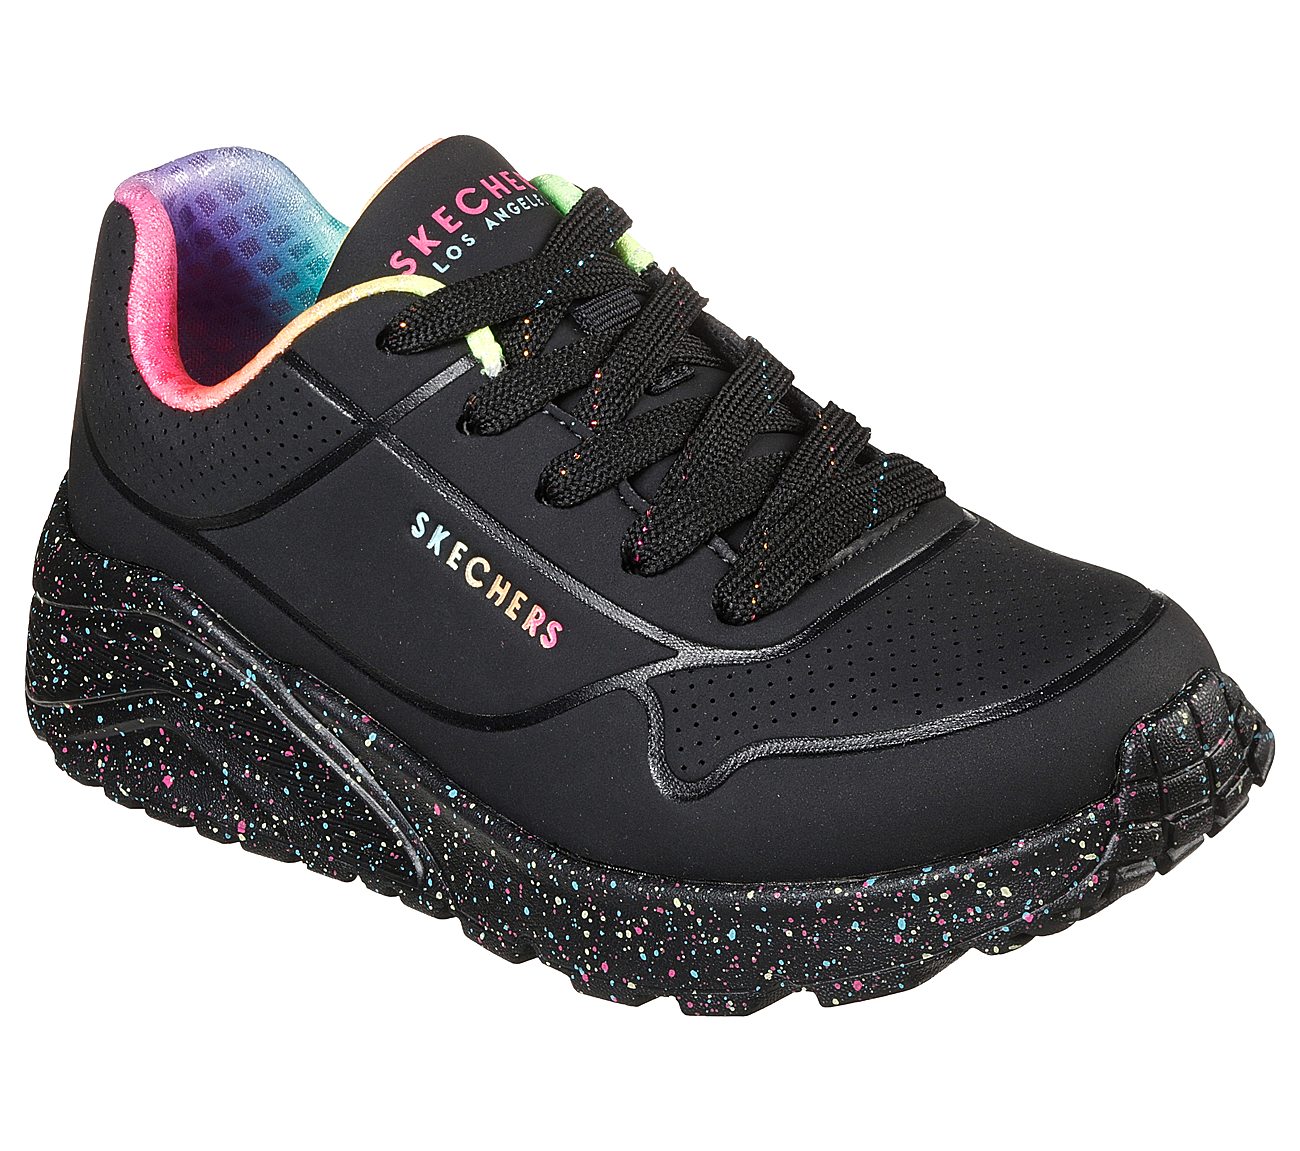 UNO LITE-RAINBOW SPECKLE, BLACK/MULTI Footwear Right View